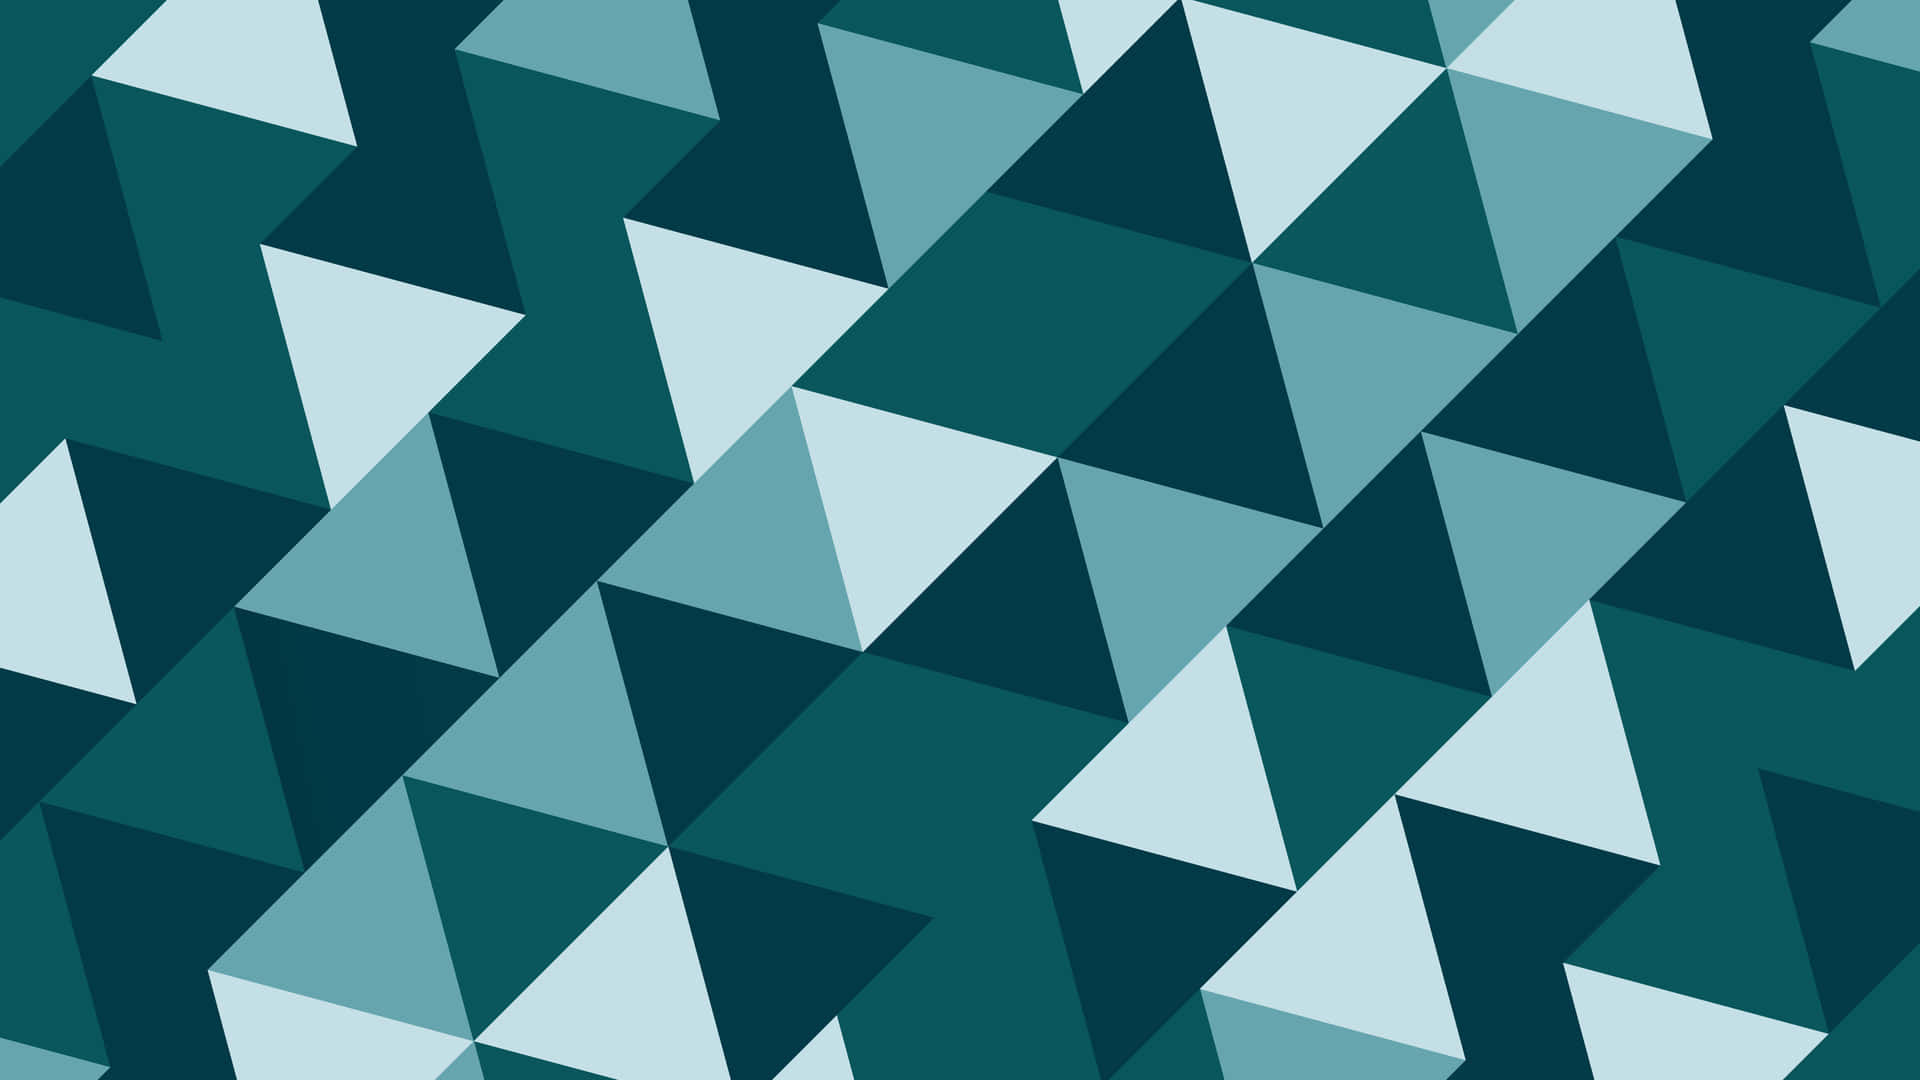 Abstract Triangular Pattern.jpg Wallpaper